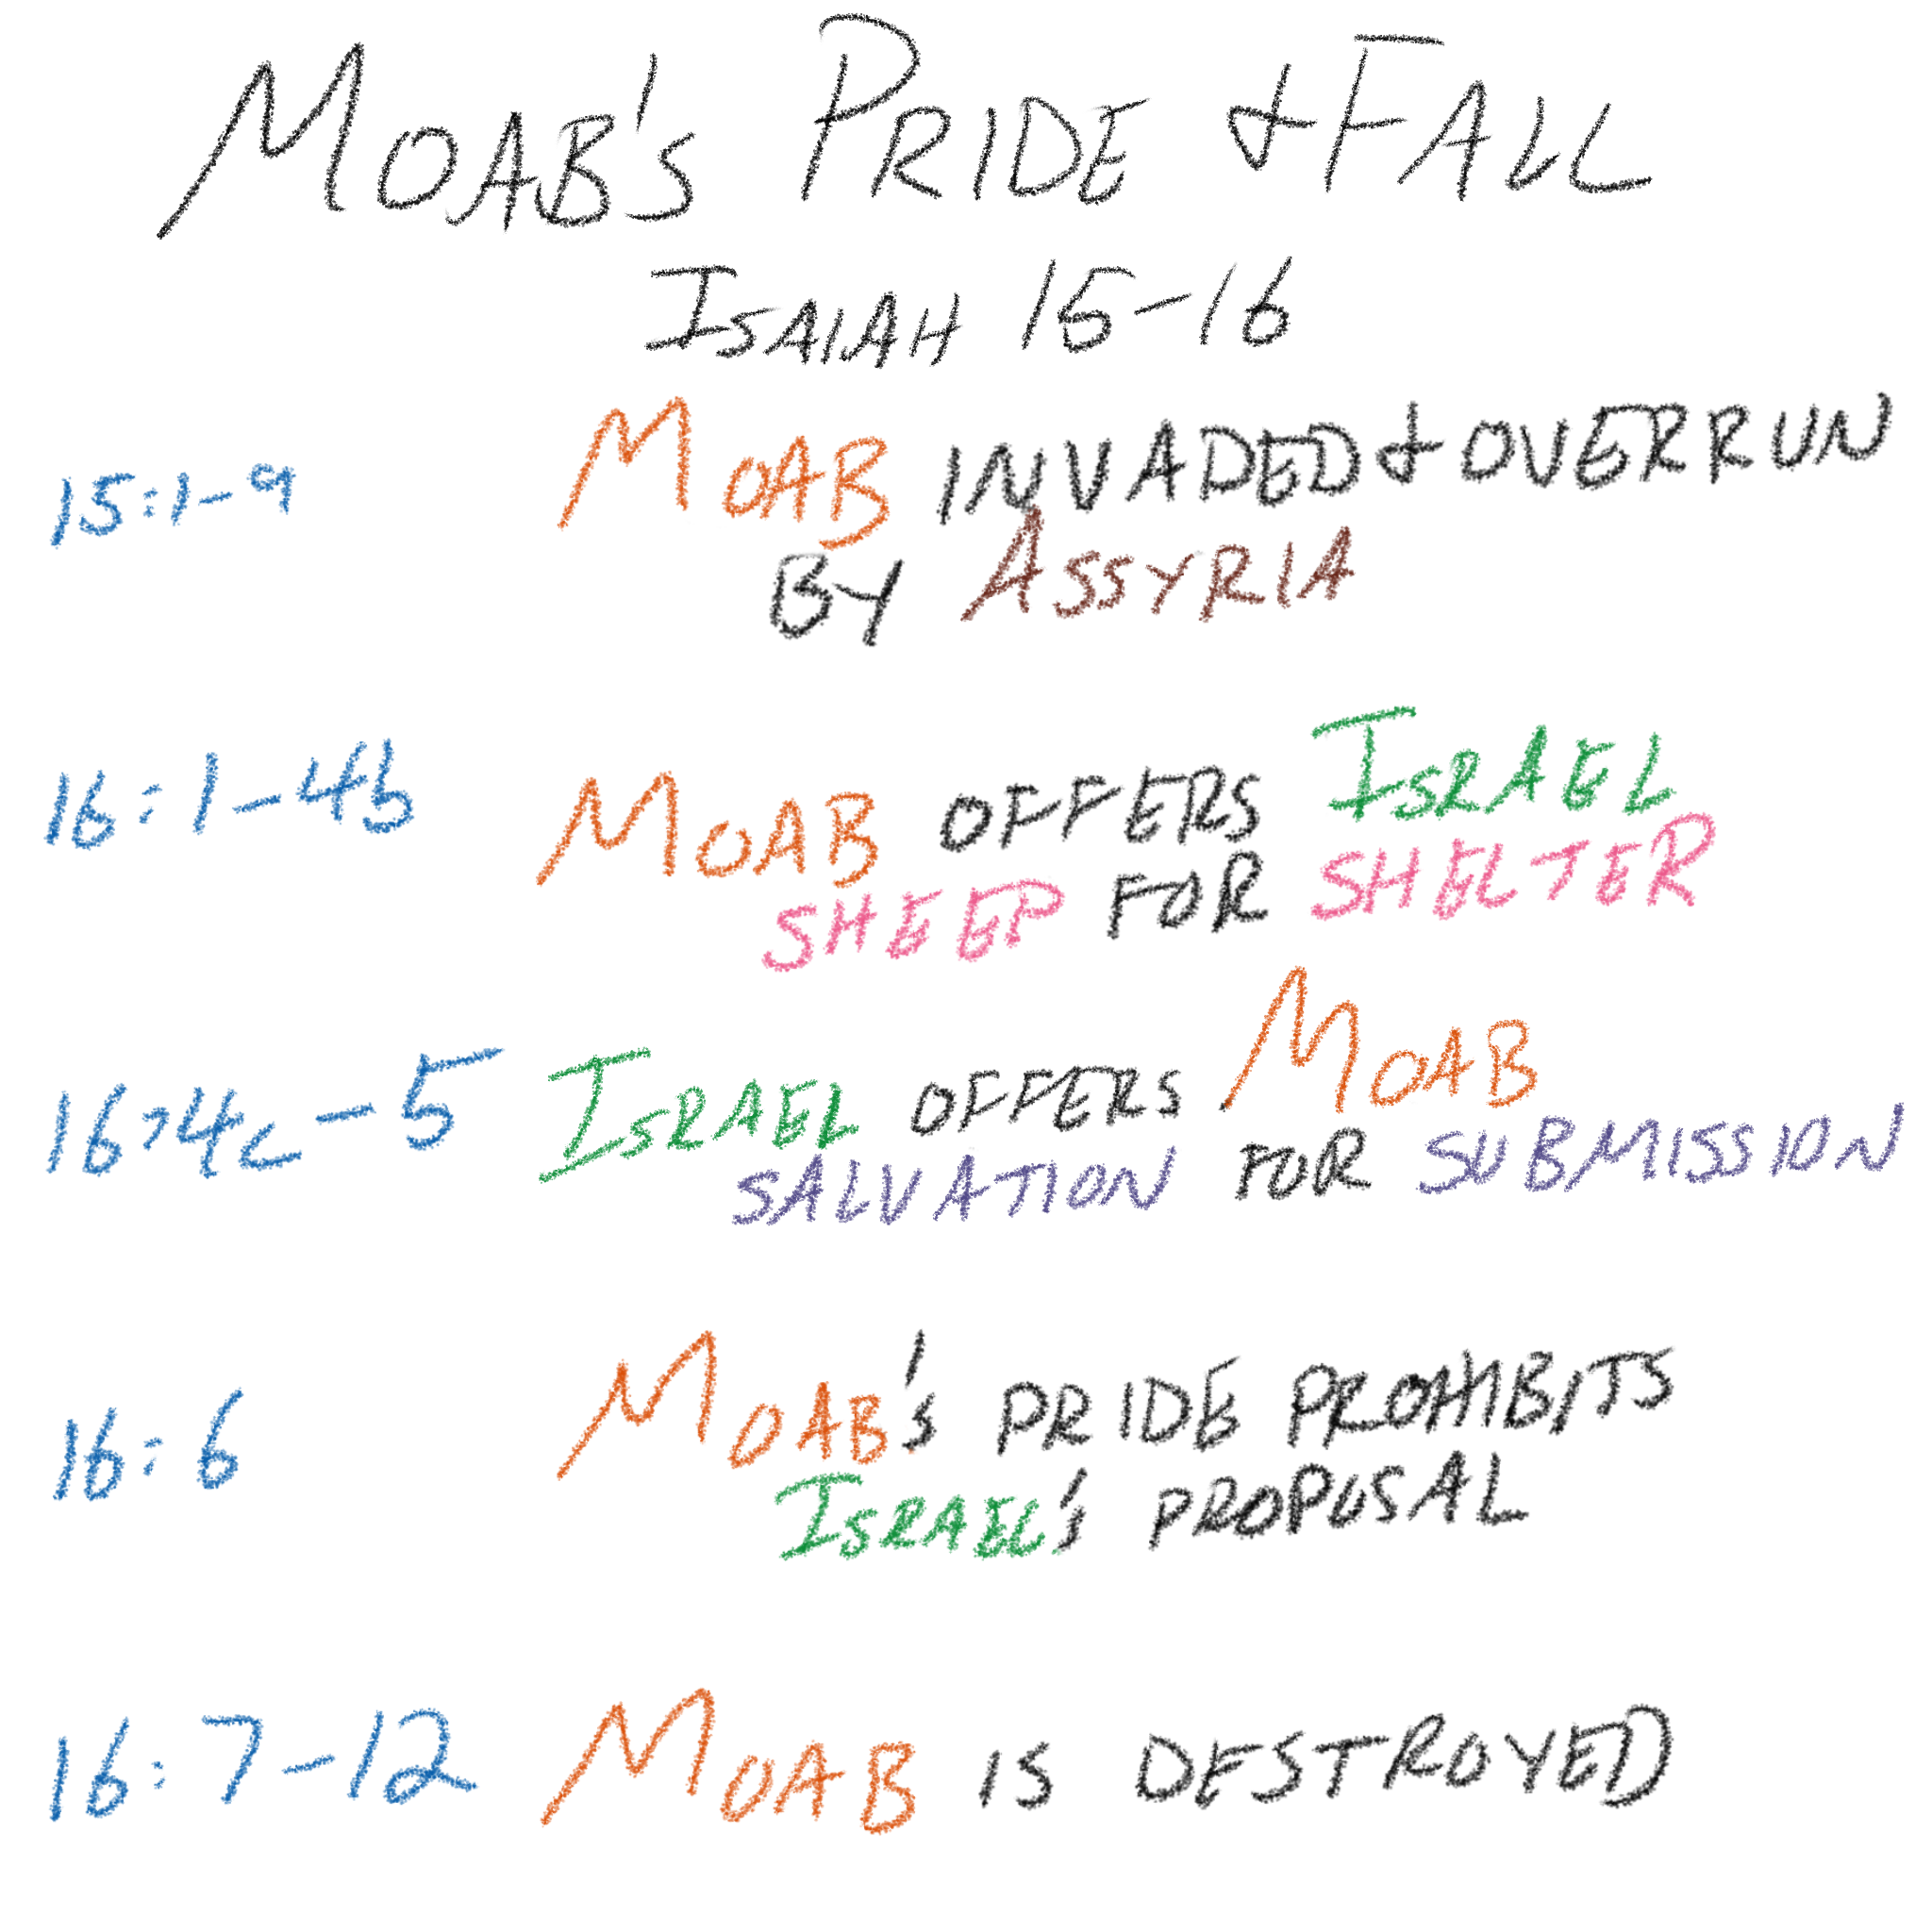 Isaiah 15-16: Moab's Pride and Fall